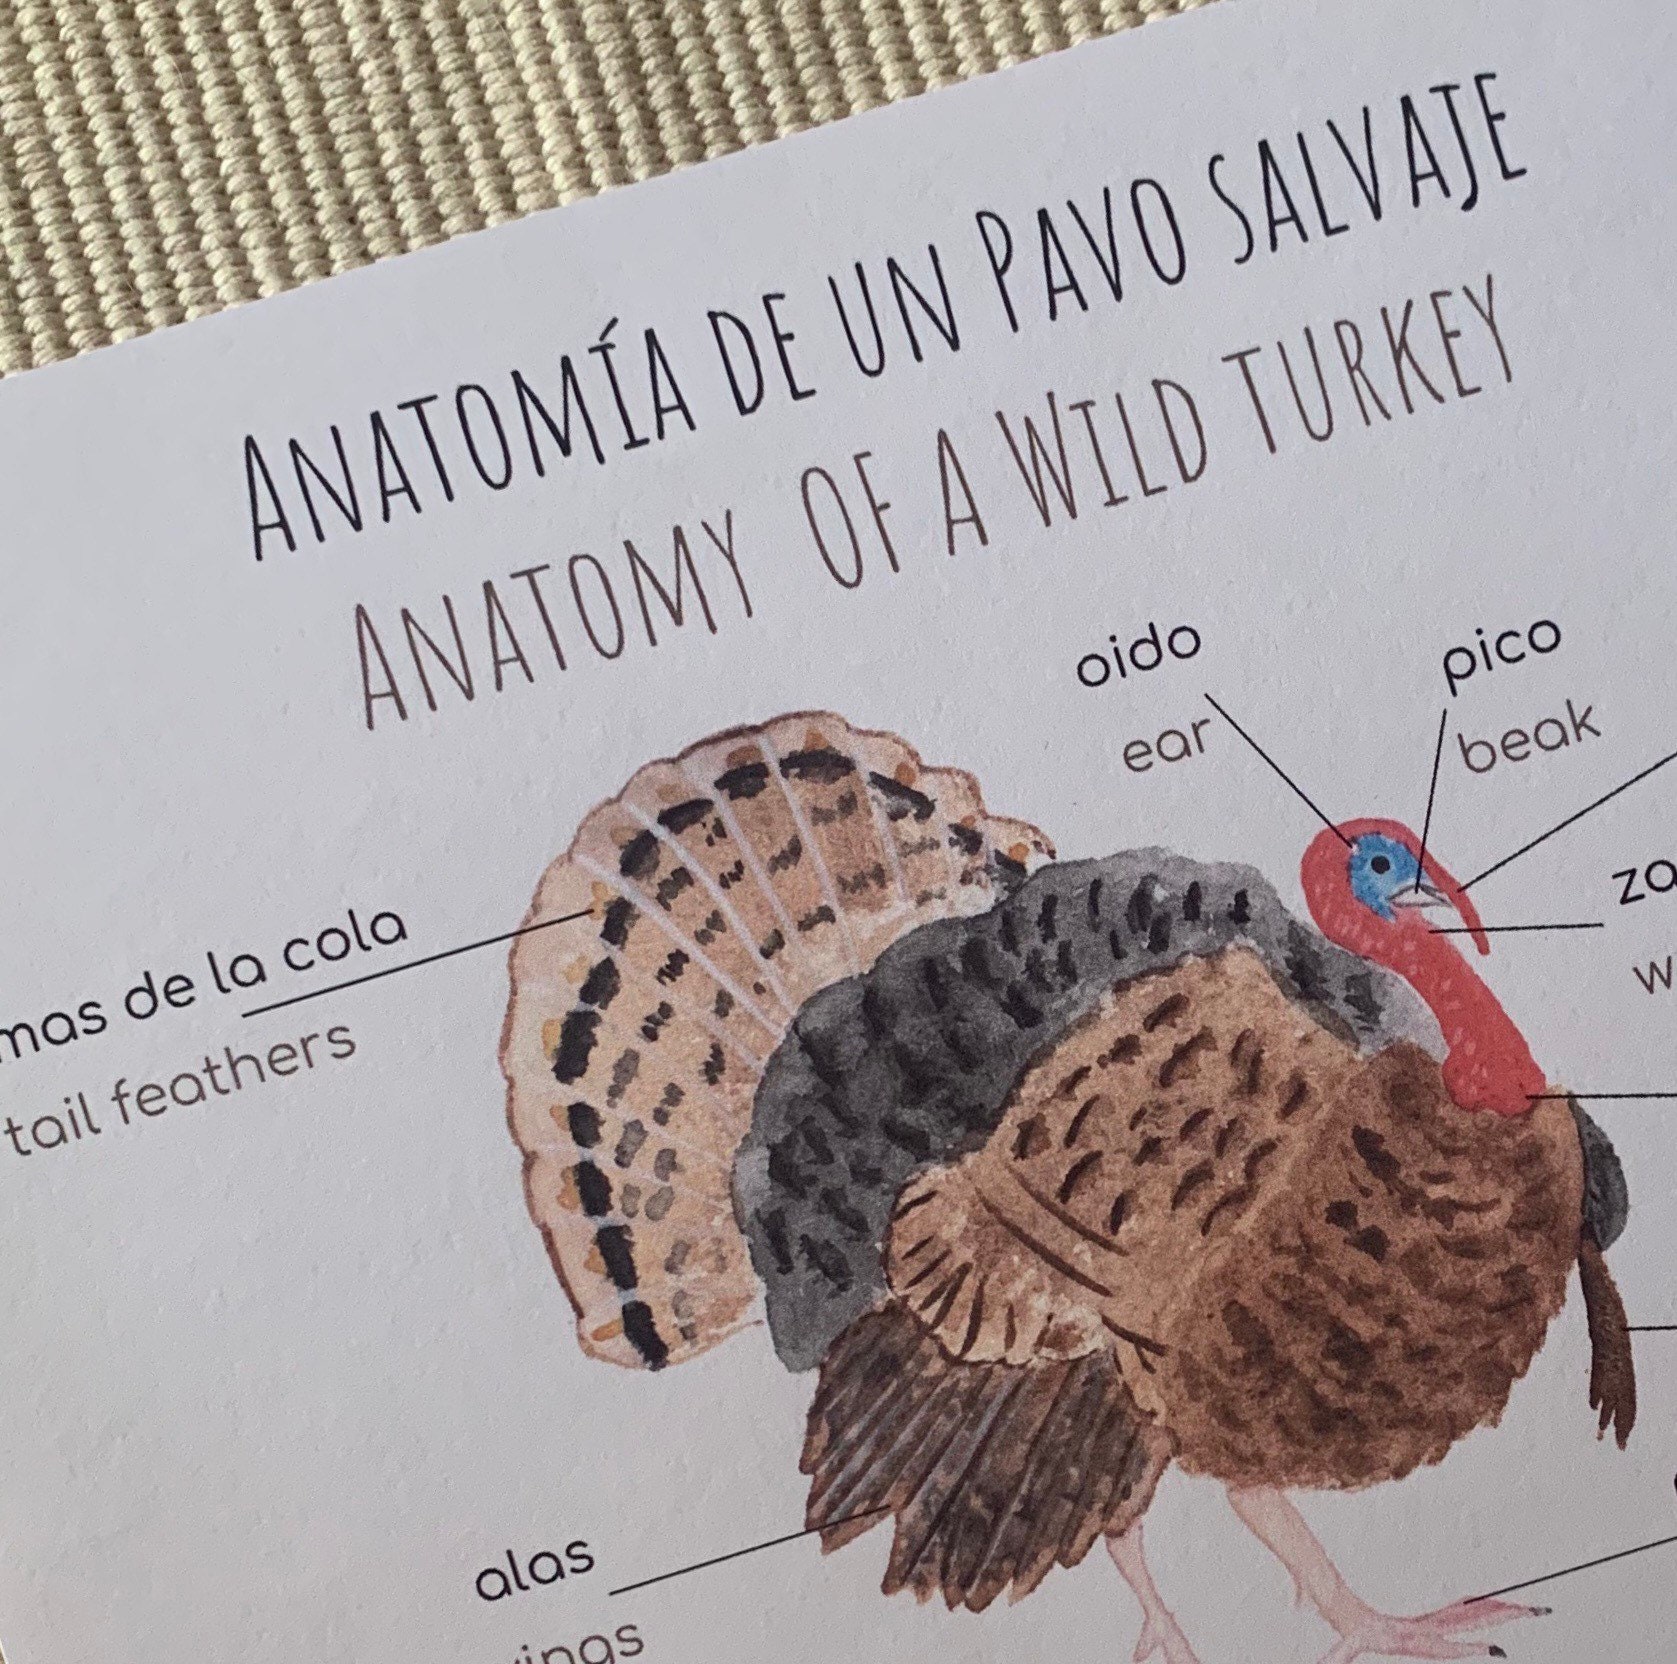 Libro infantil ingles: Donde esta mi pavo. Where is my Turkey